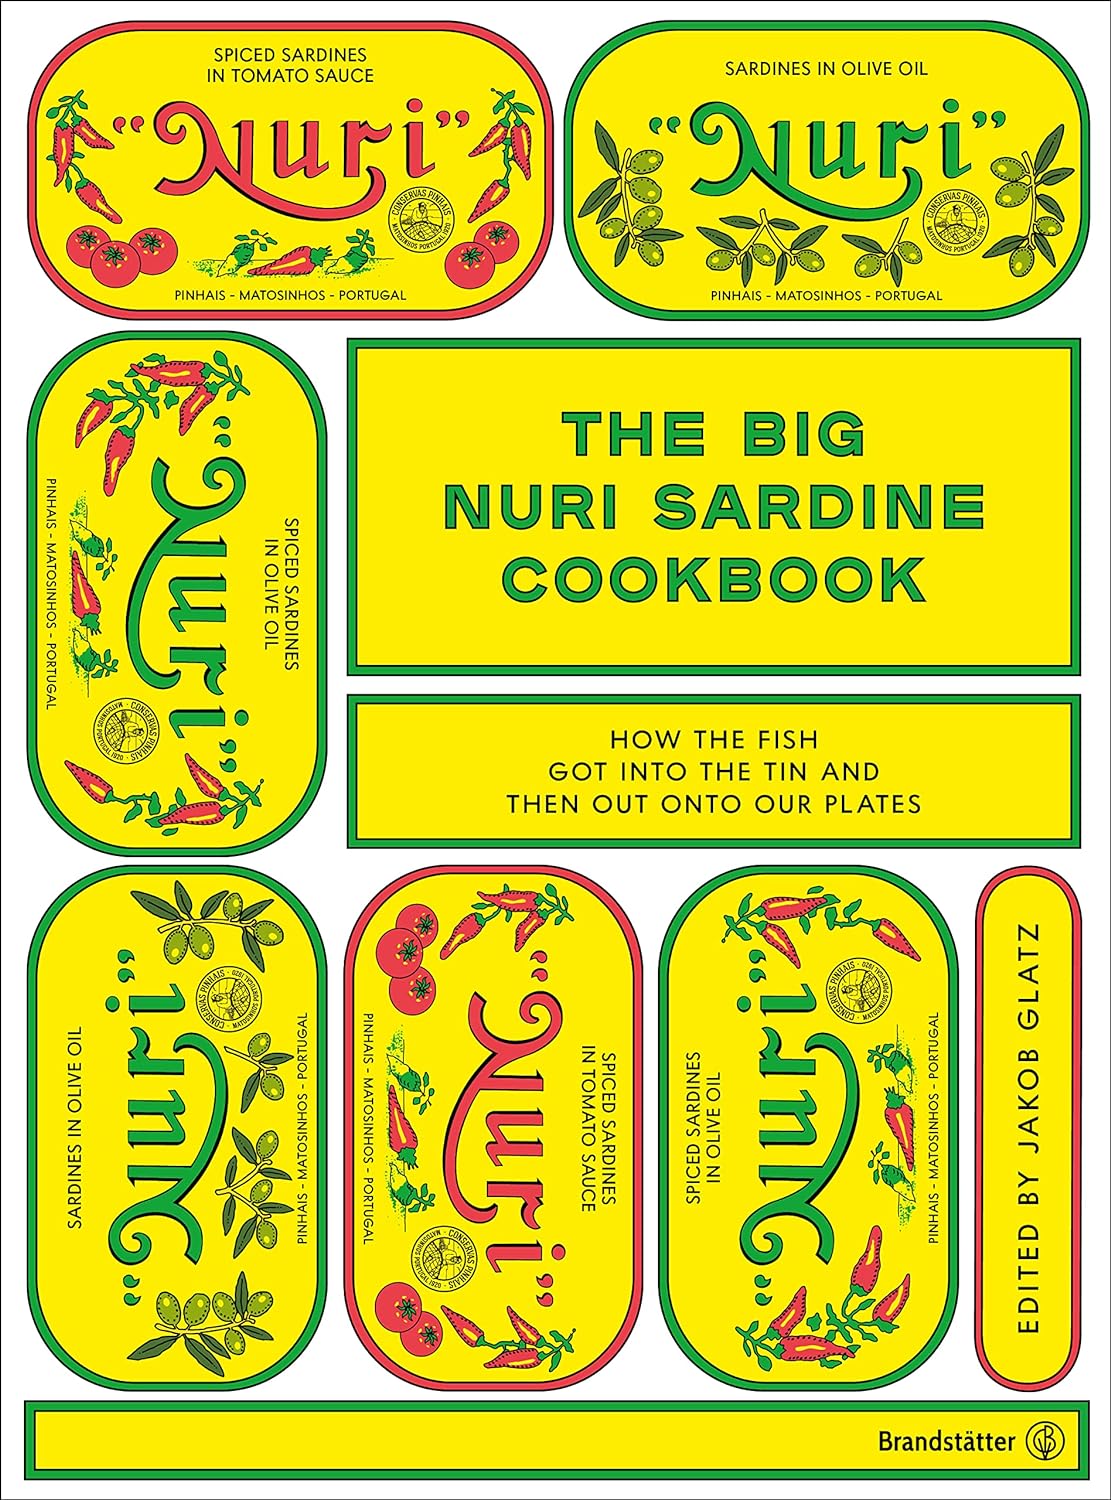 Jakob Glatz, Anna Burghardt, Andres Stirn: The Big Nuri Sardine Cookbook (Hardcover, Brandstätter)